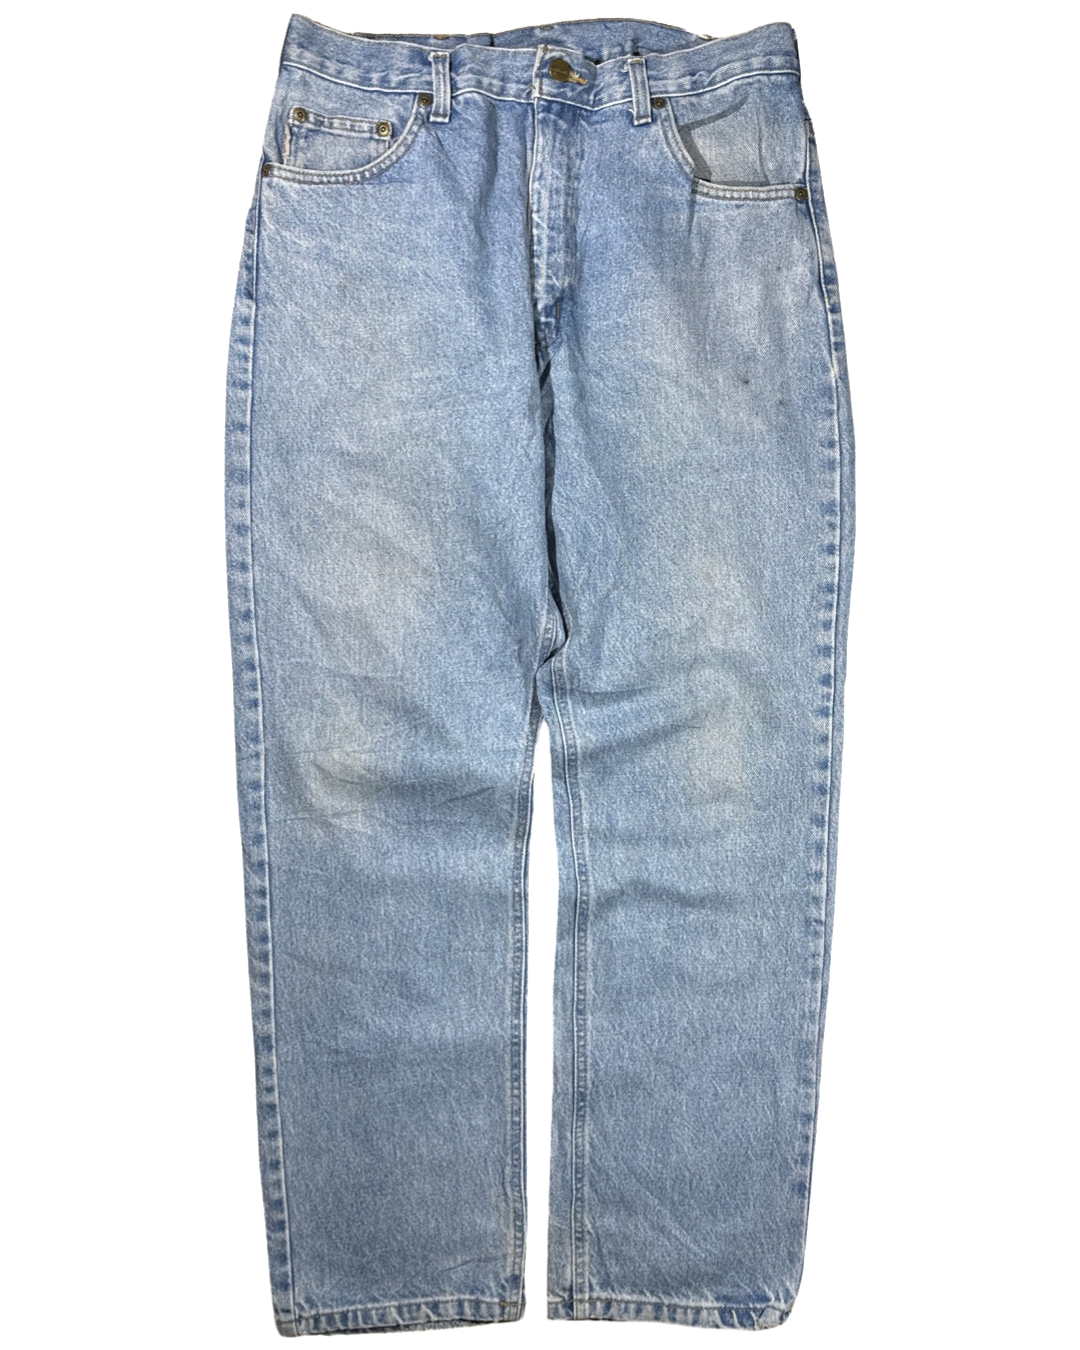 Vintage Carhartt Loose Jeans - W 33"